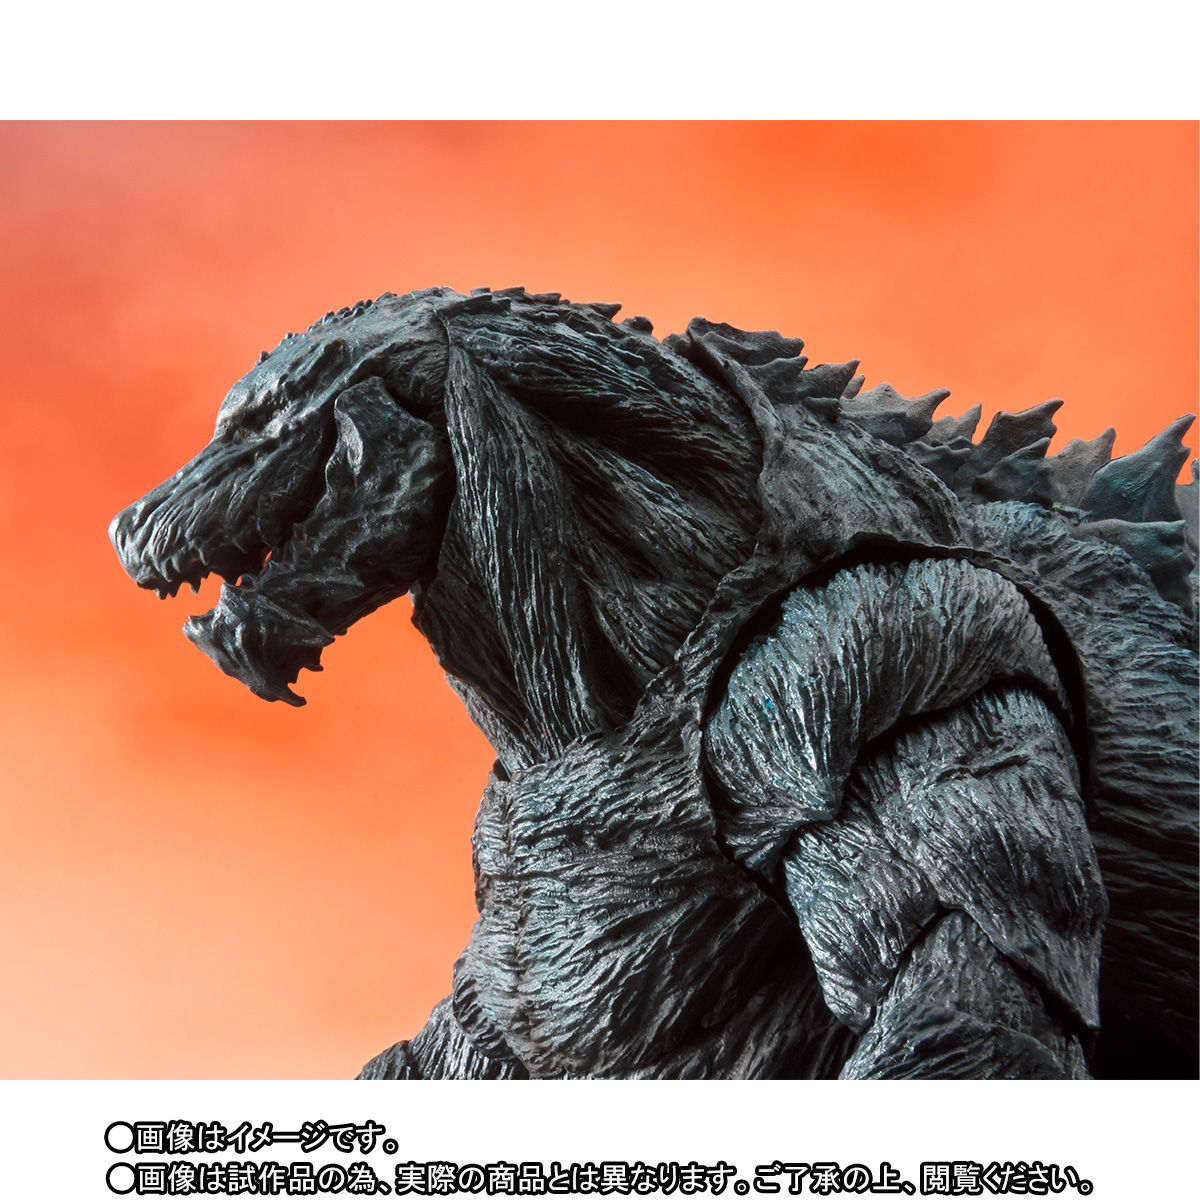 Godzilla Earth (ゴジラ・アース Gojira Āsu) 2017